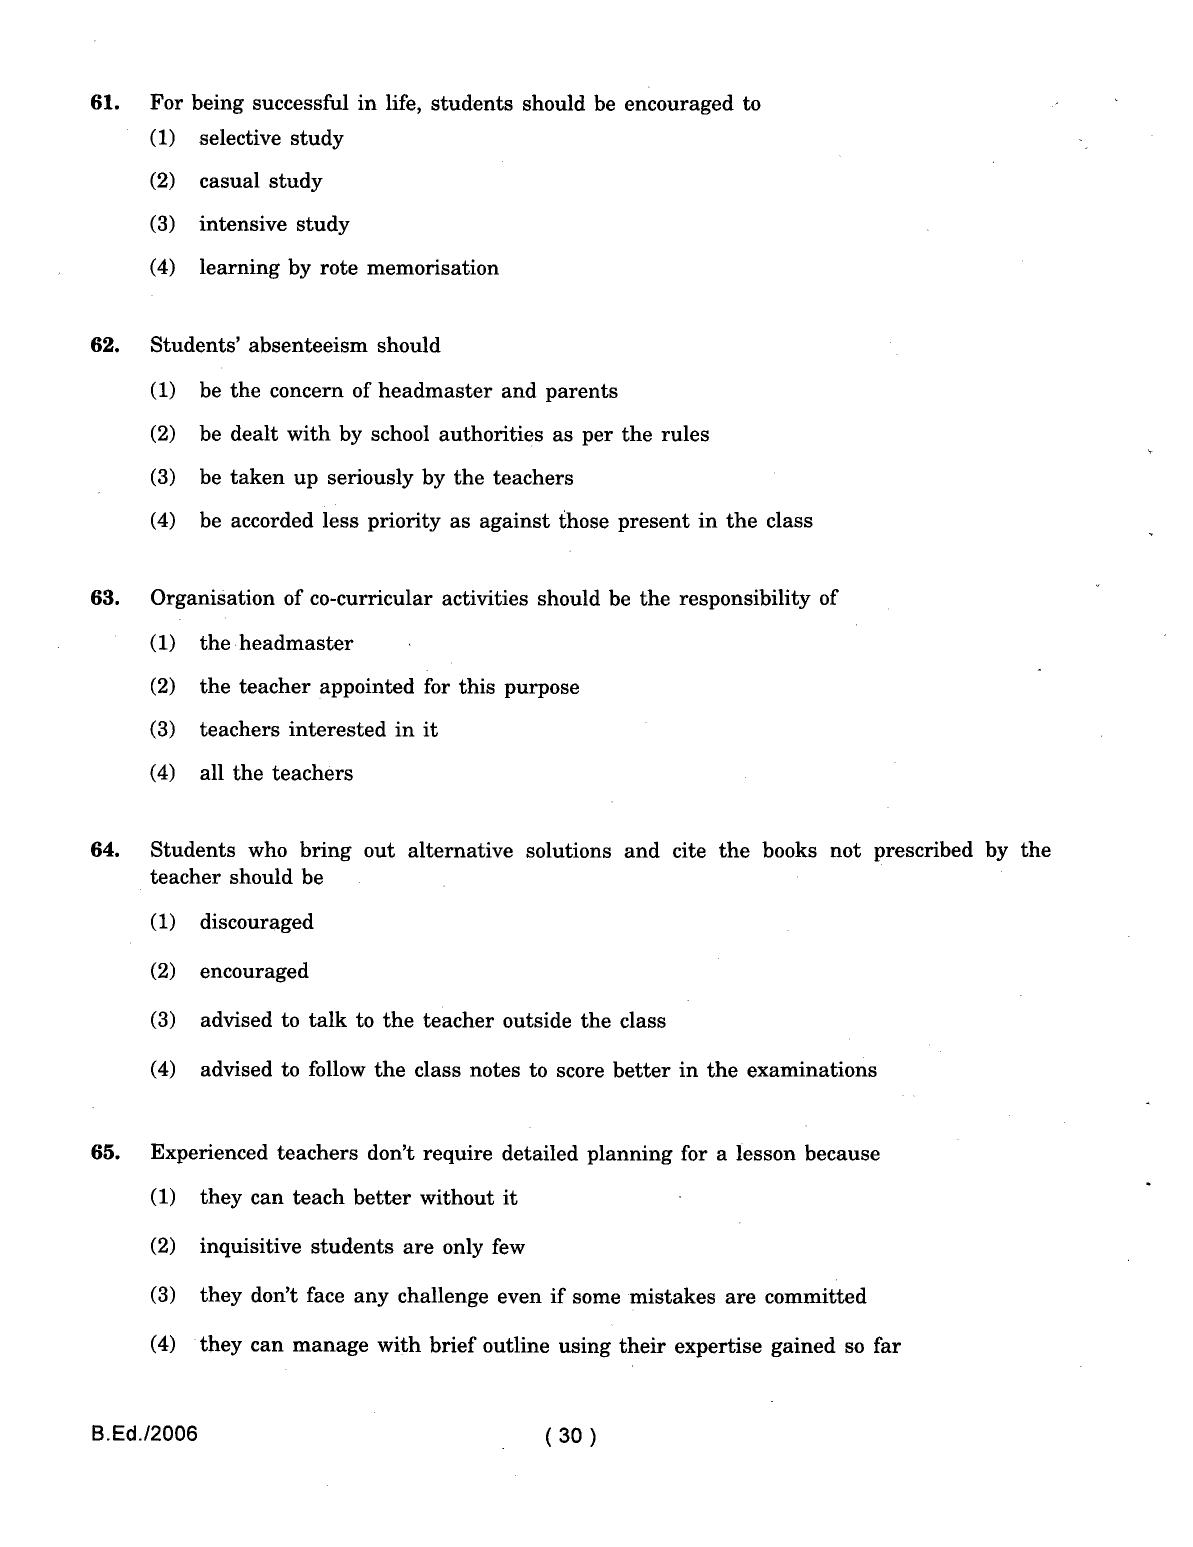 IGNOU B.Ed 2006 Question Paper - Page 30